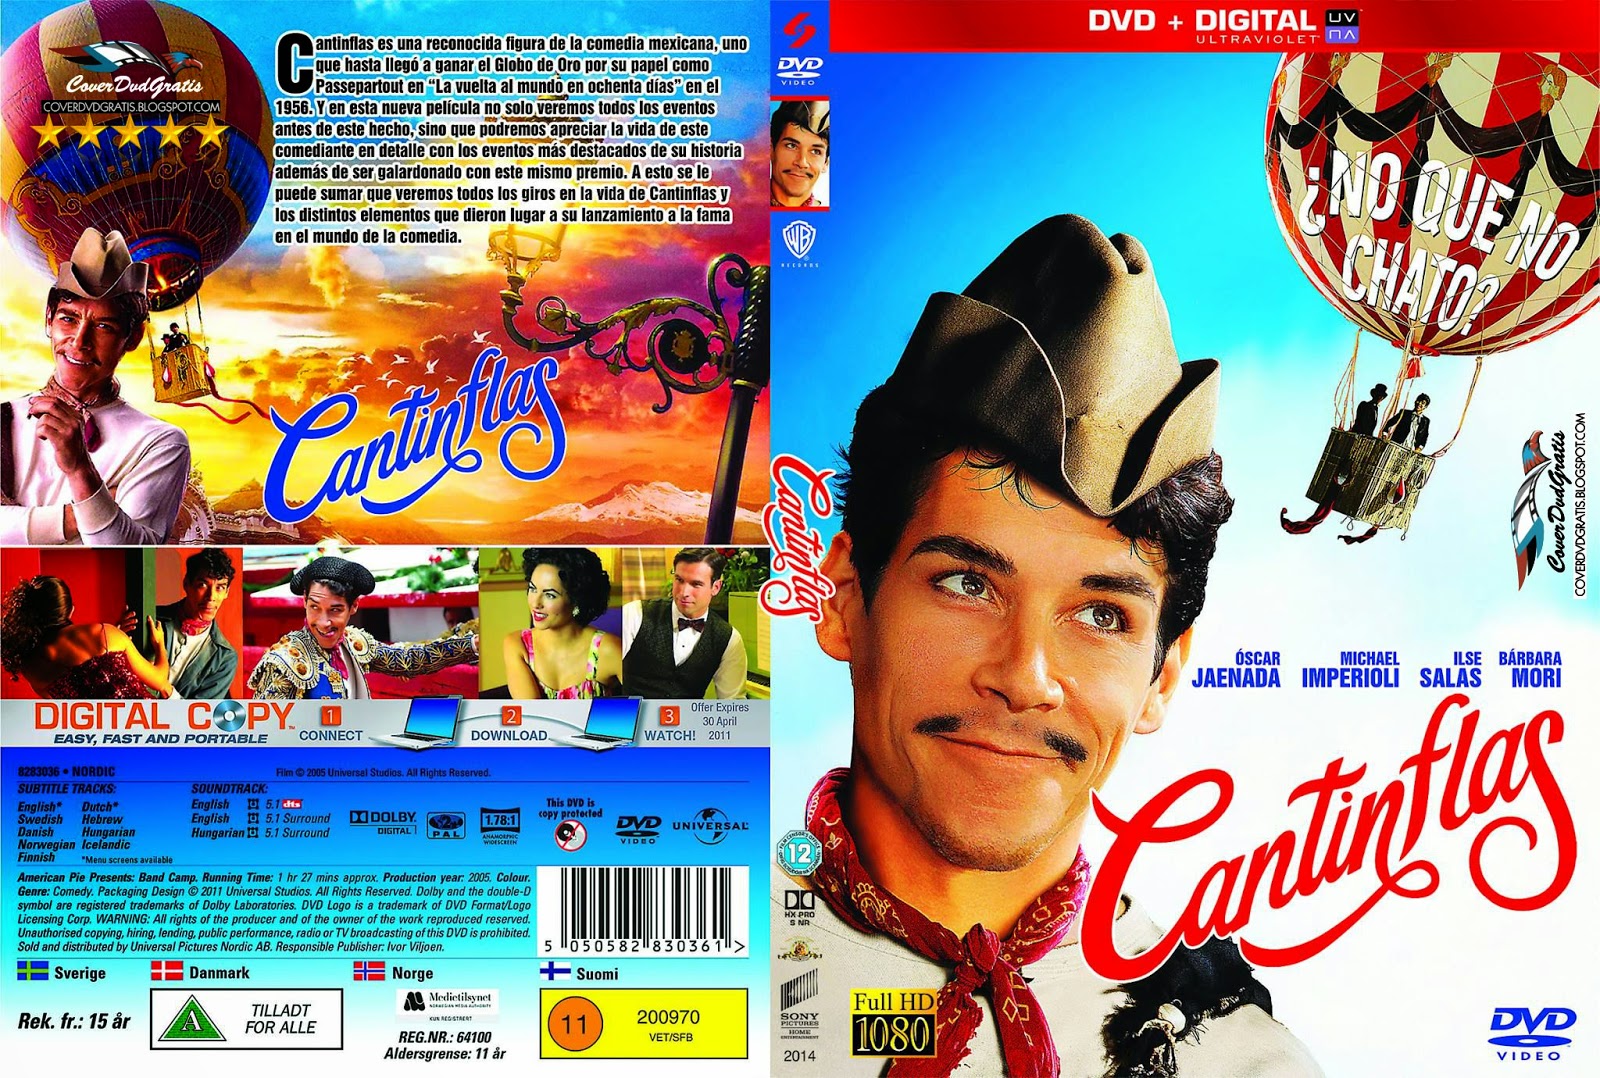 Cantinflas 2014 DVD COVER - CoverDvdGratis